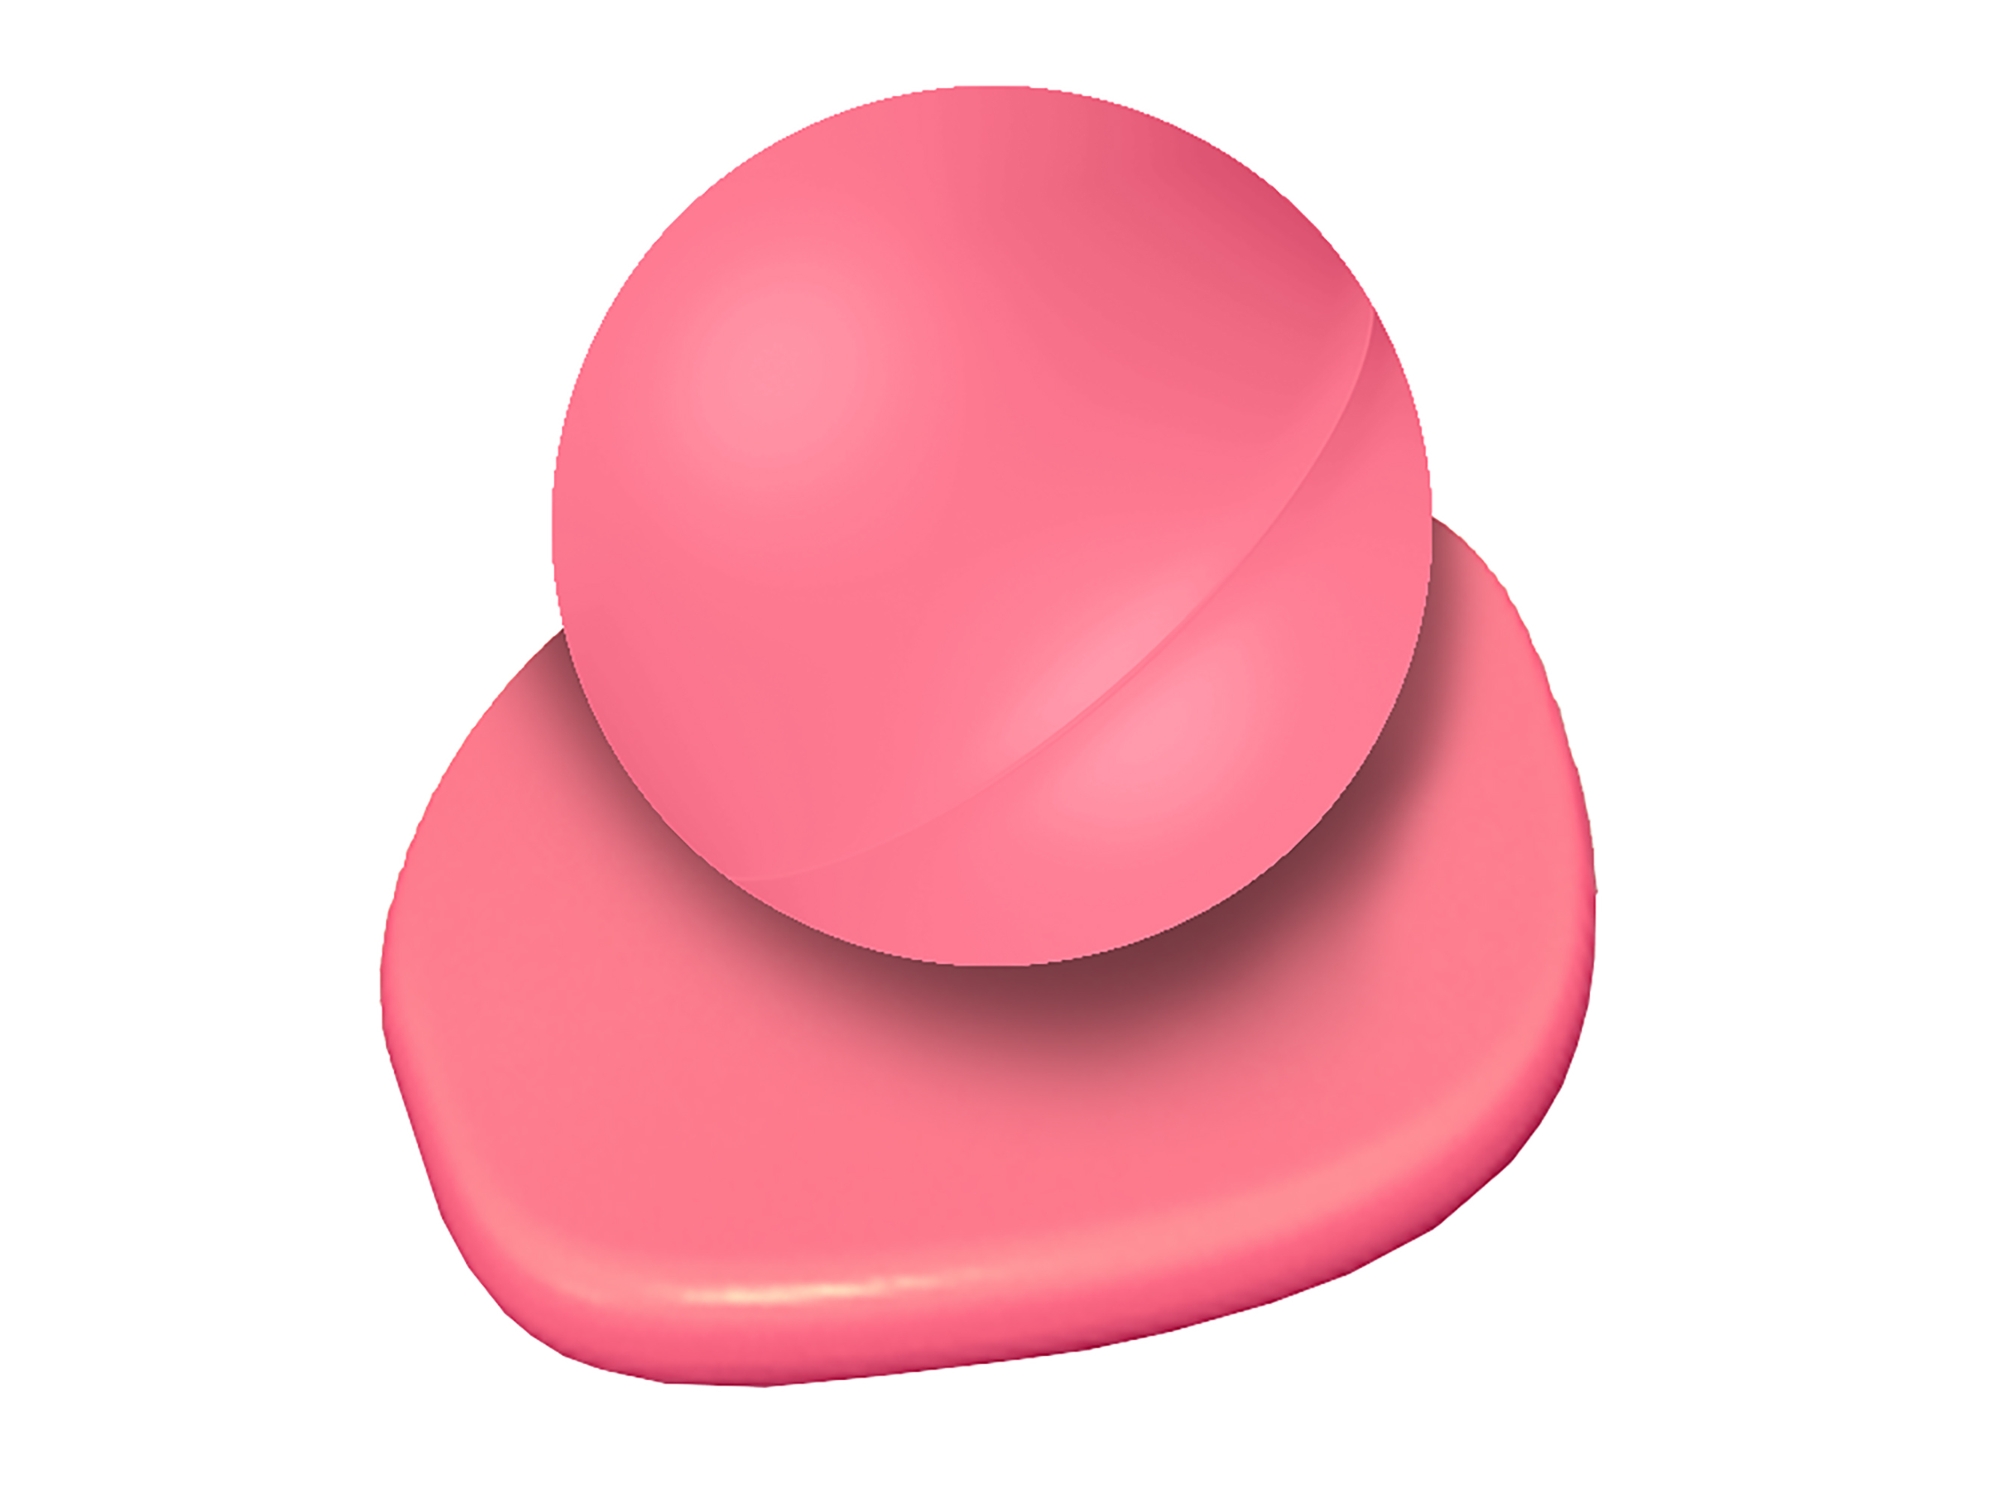 DXS Recsport 68cal 2K Paintballs, Pink, .68 0.68